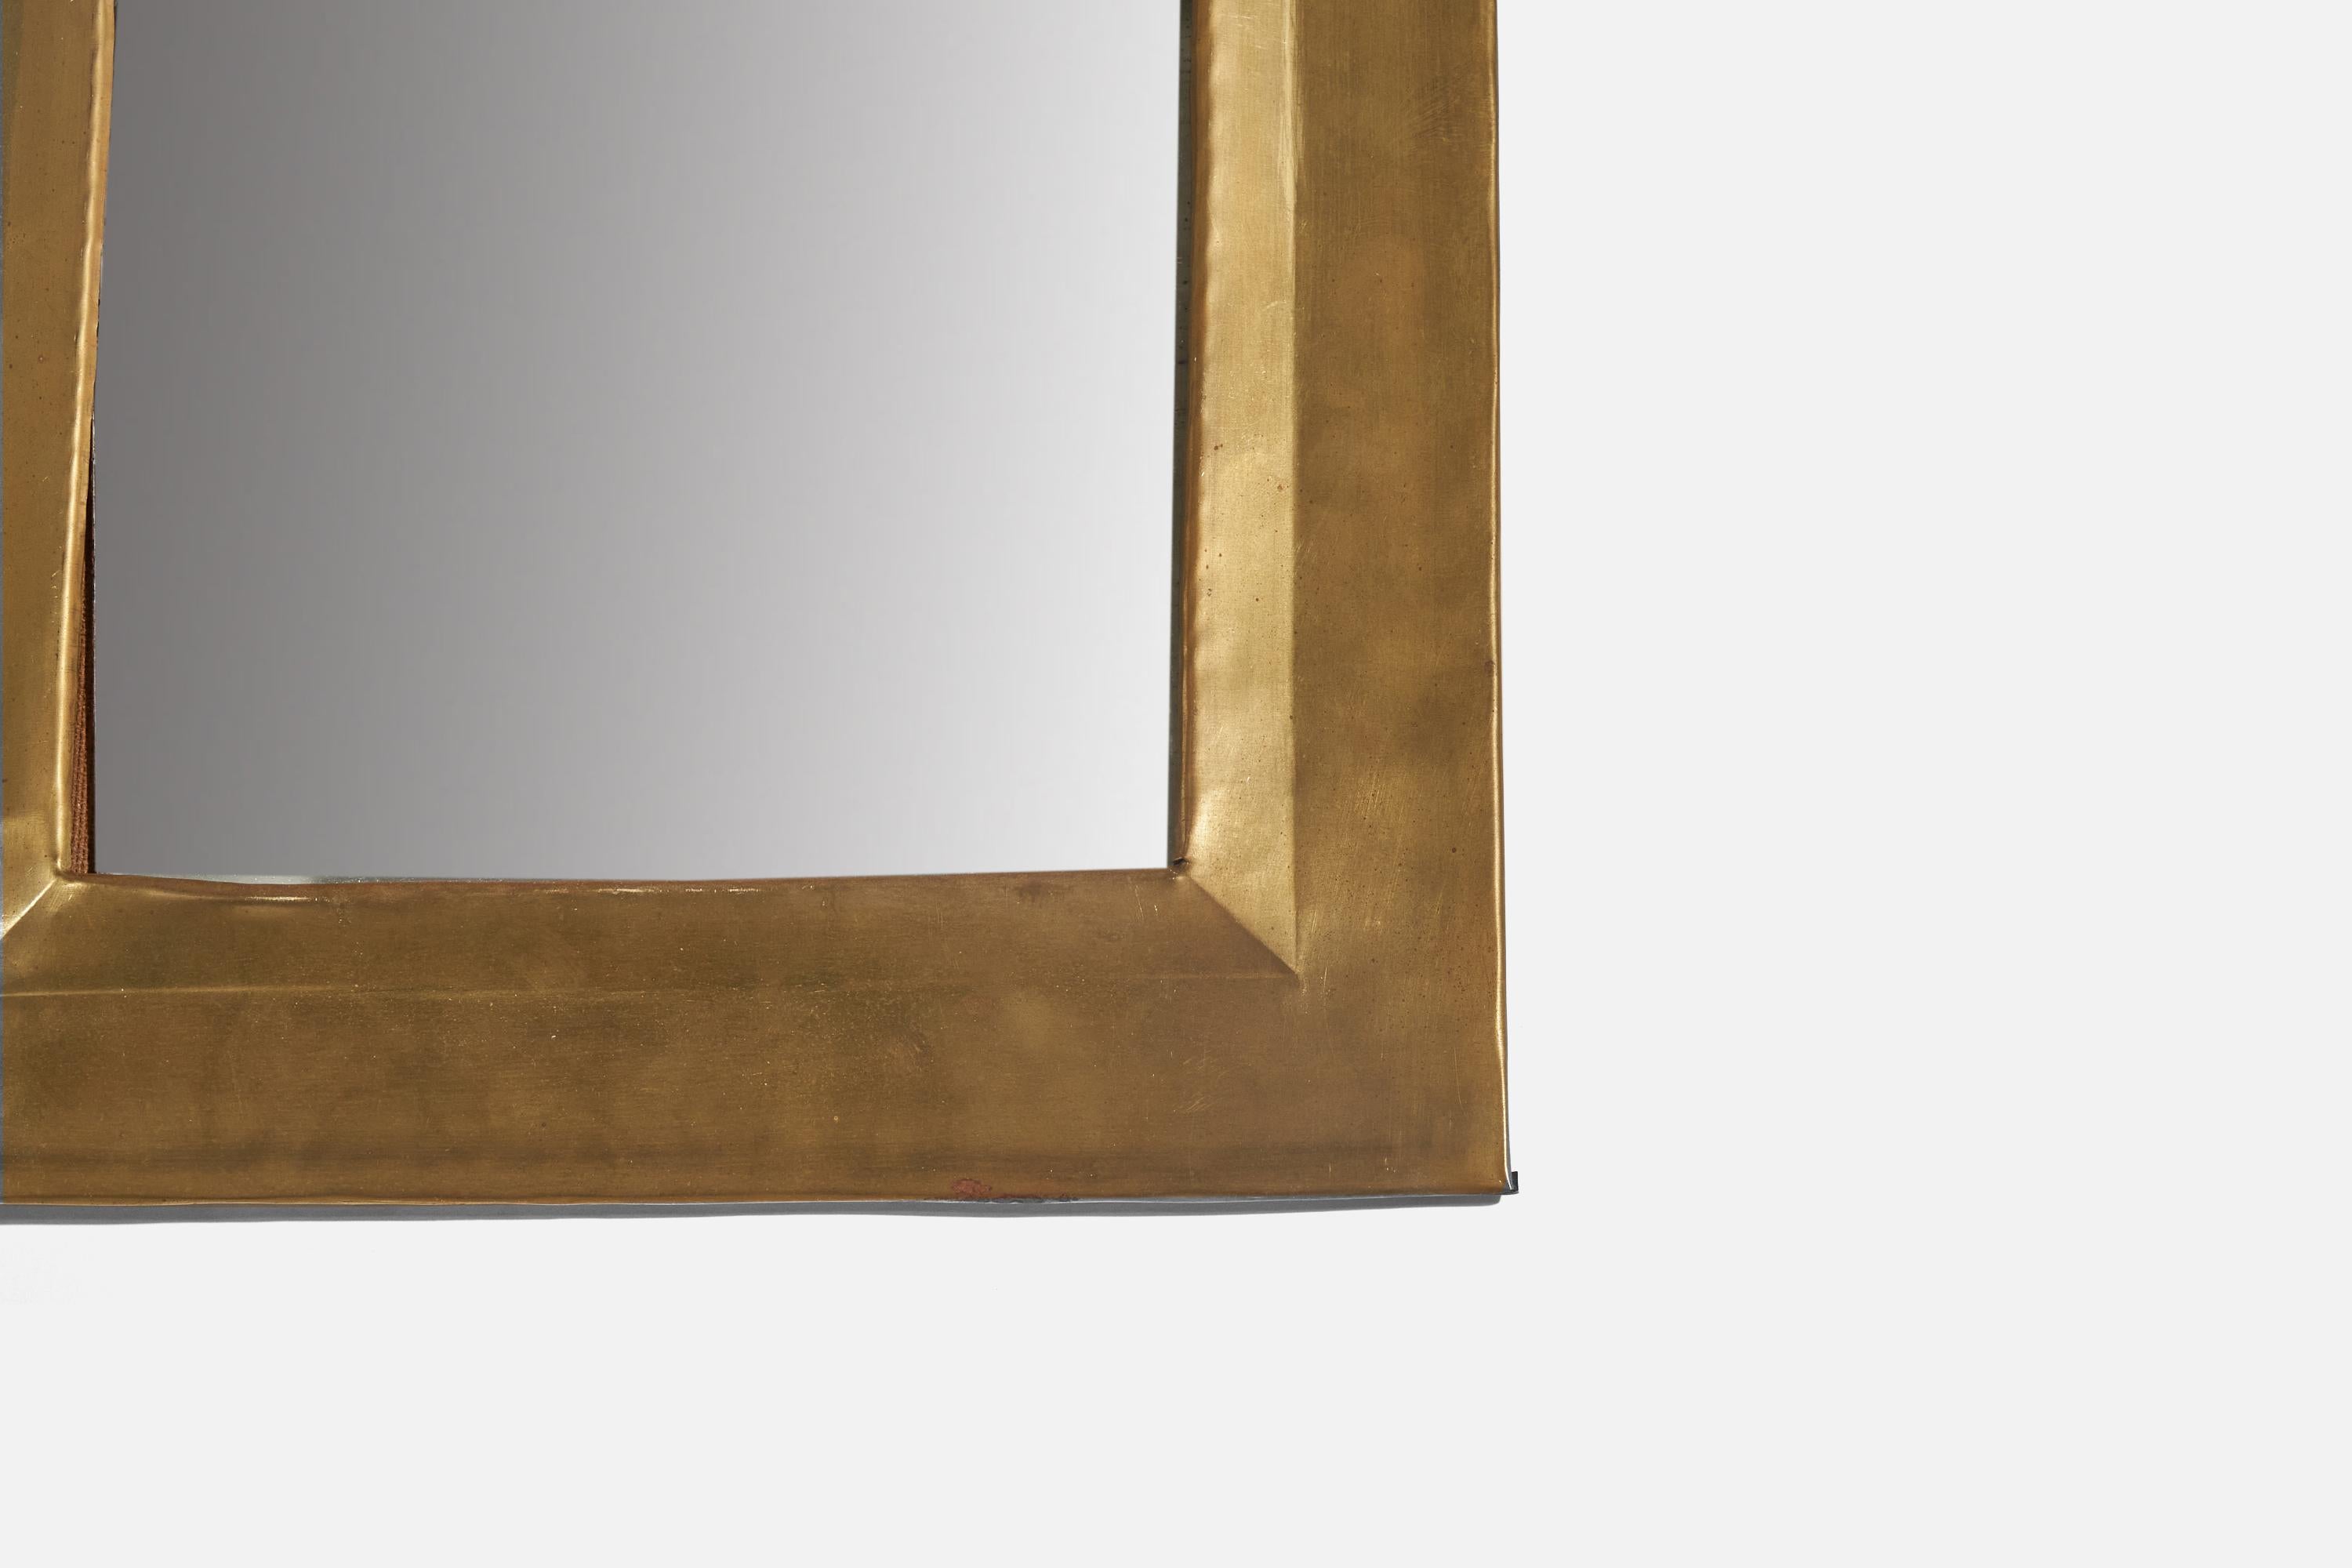 Mid-Century Modern Italian Designer, Wall Mirror, Brass, Mirror Glass, Italy, c. 1940s For Sale